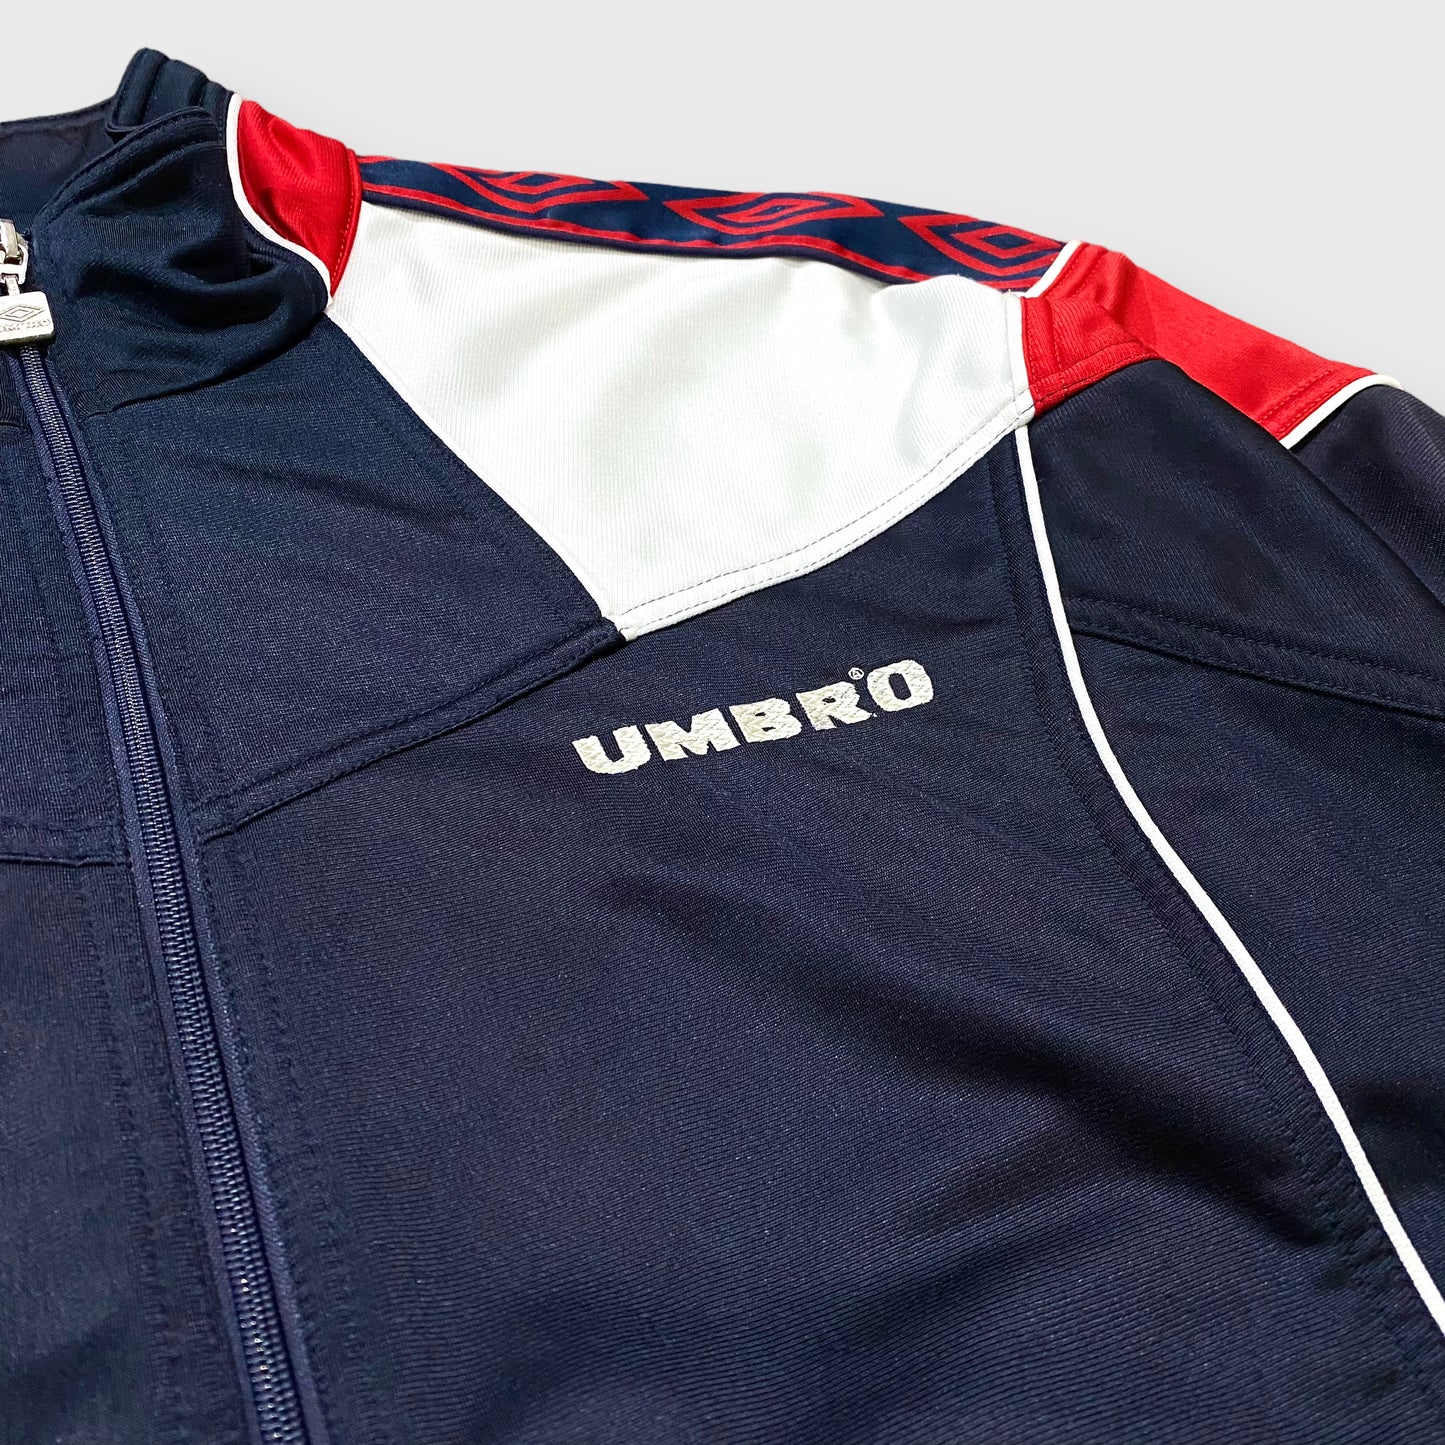 90's "UMBRO" Track jacket